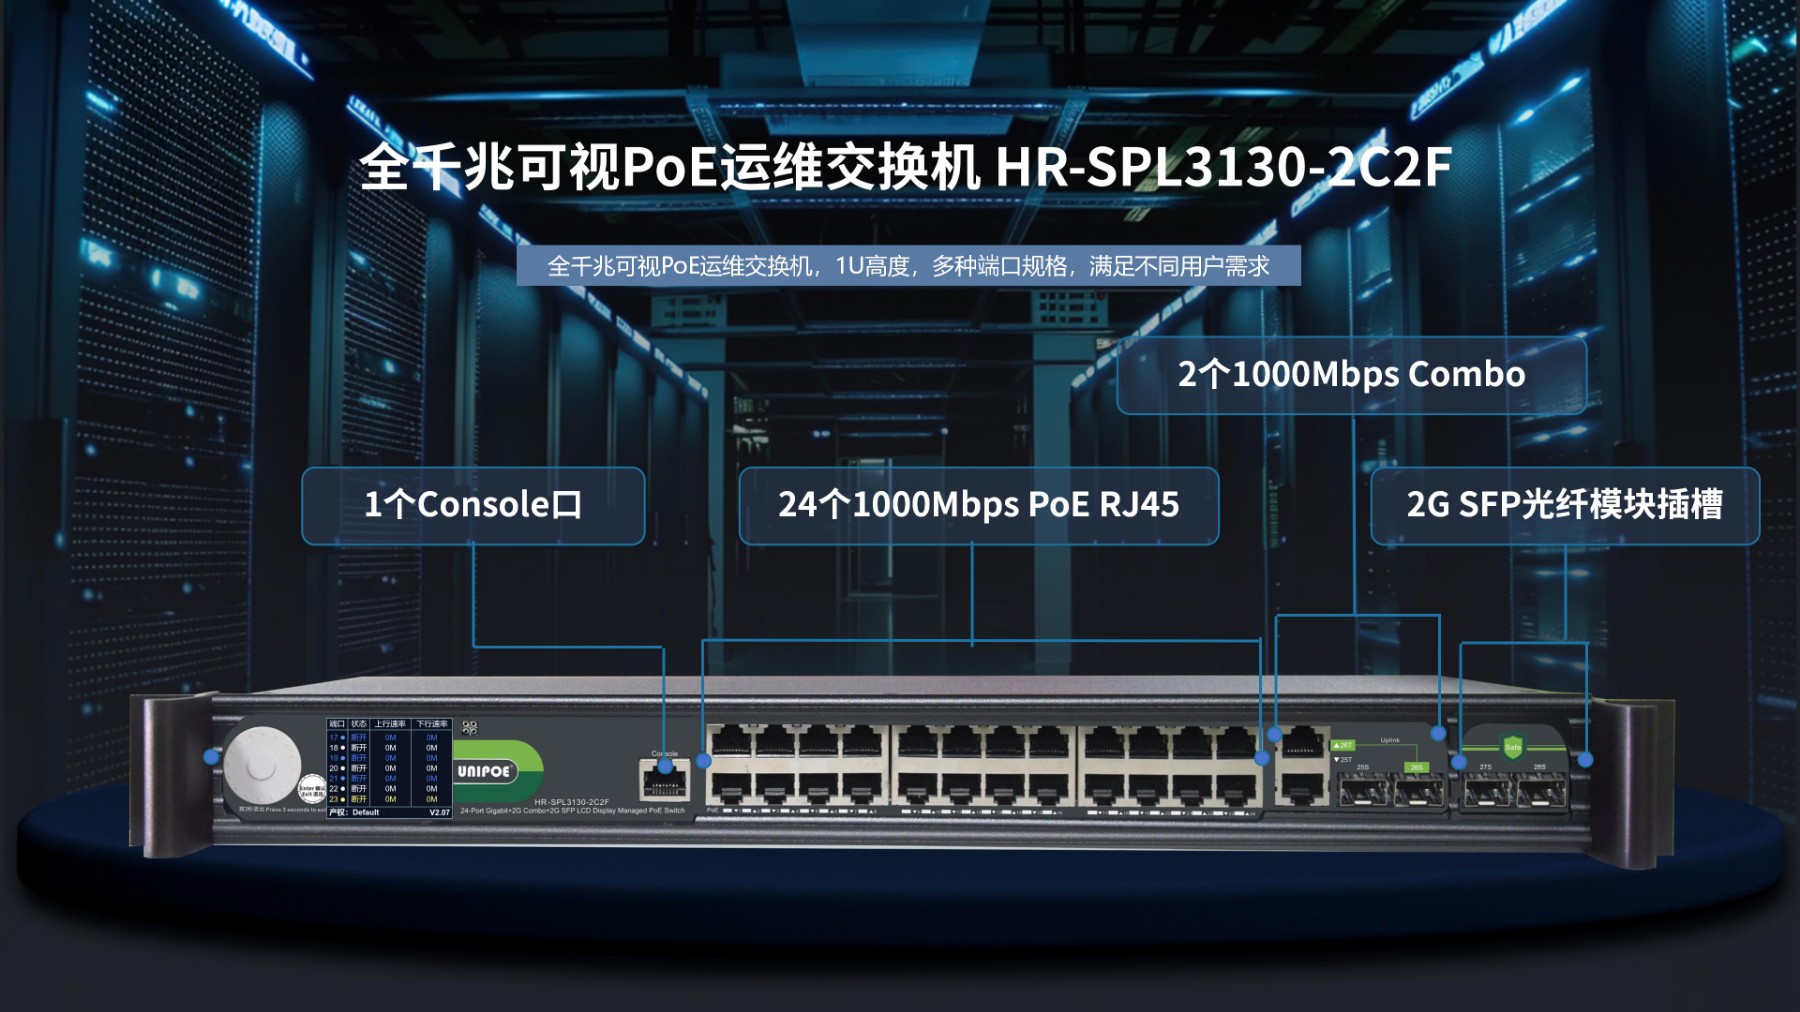 HR-SPL3130-2C2F可视交换机官网PPT_01.jpg